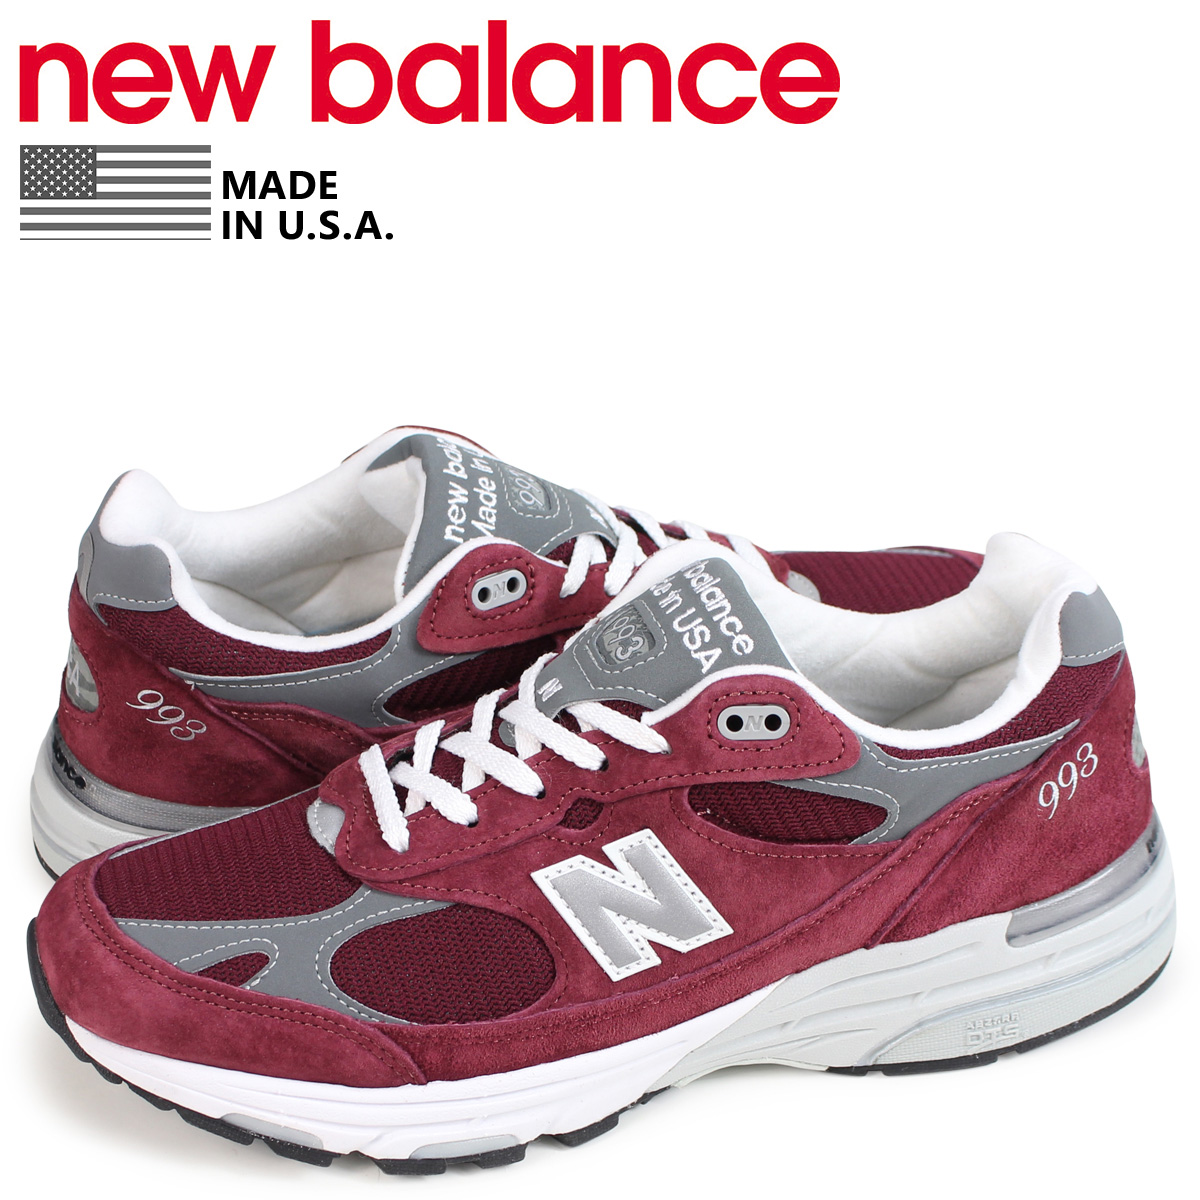 new balance 993 sale